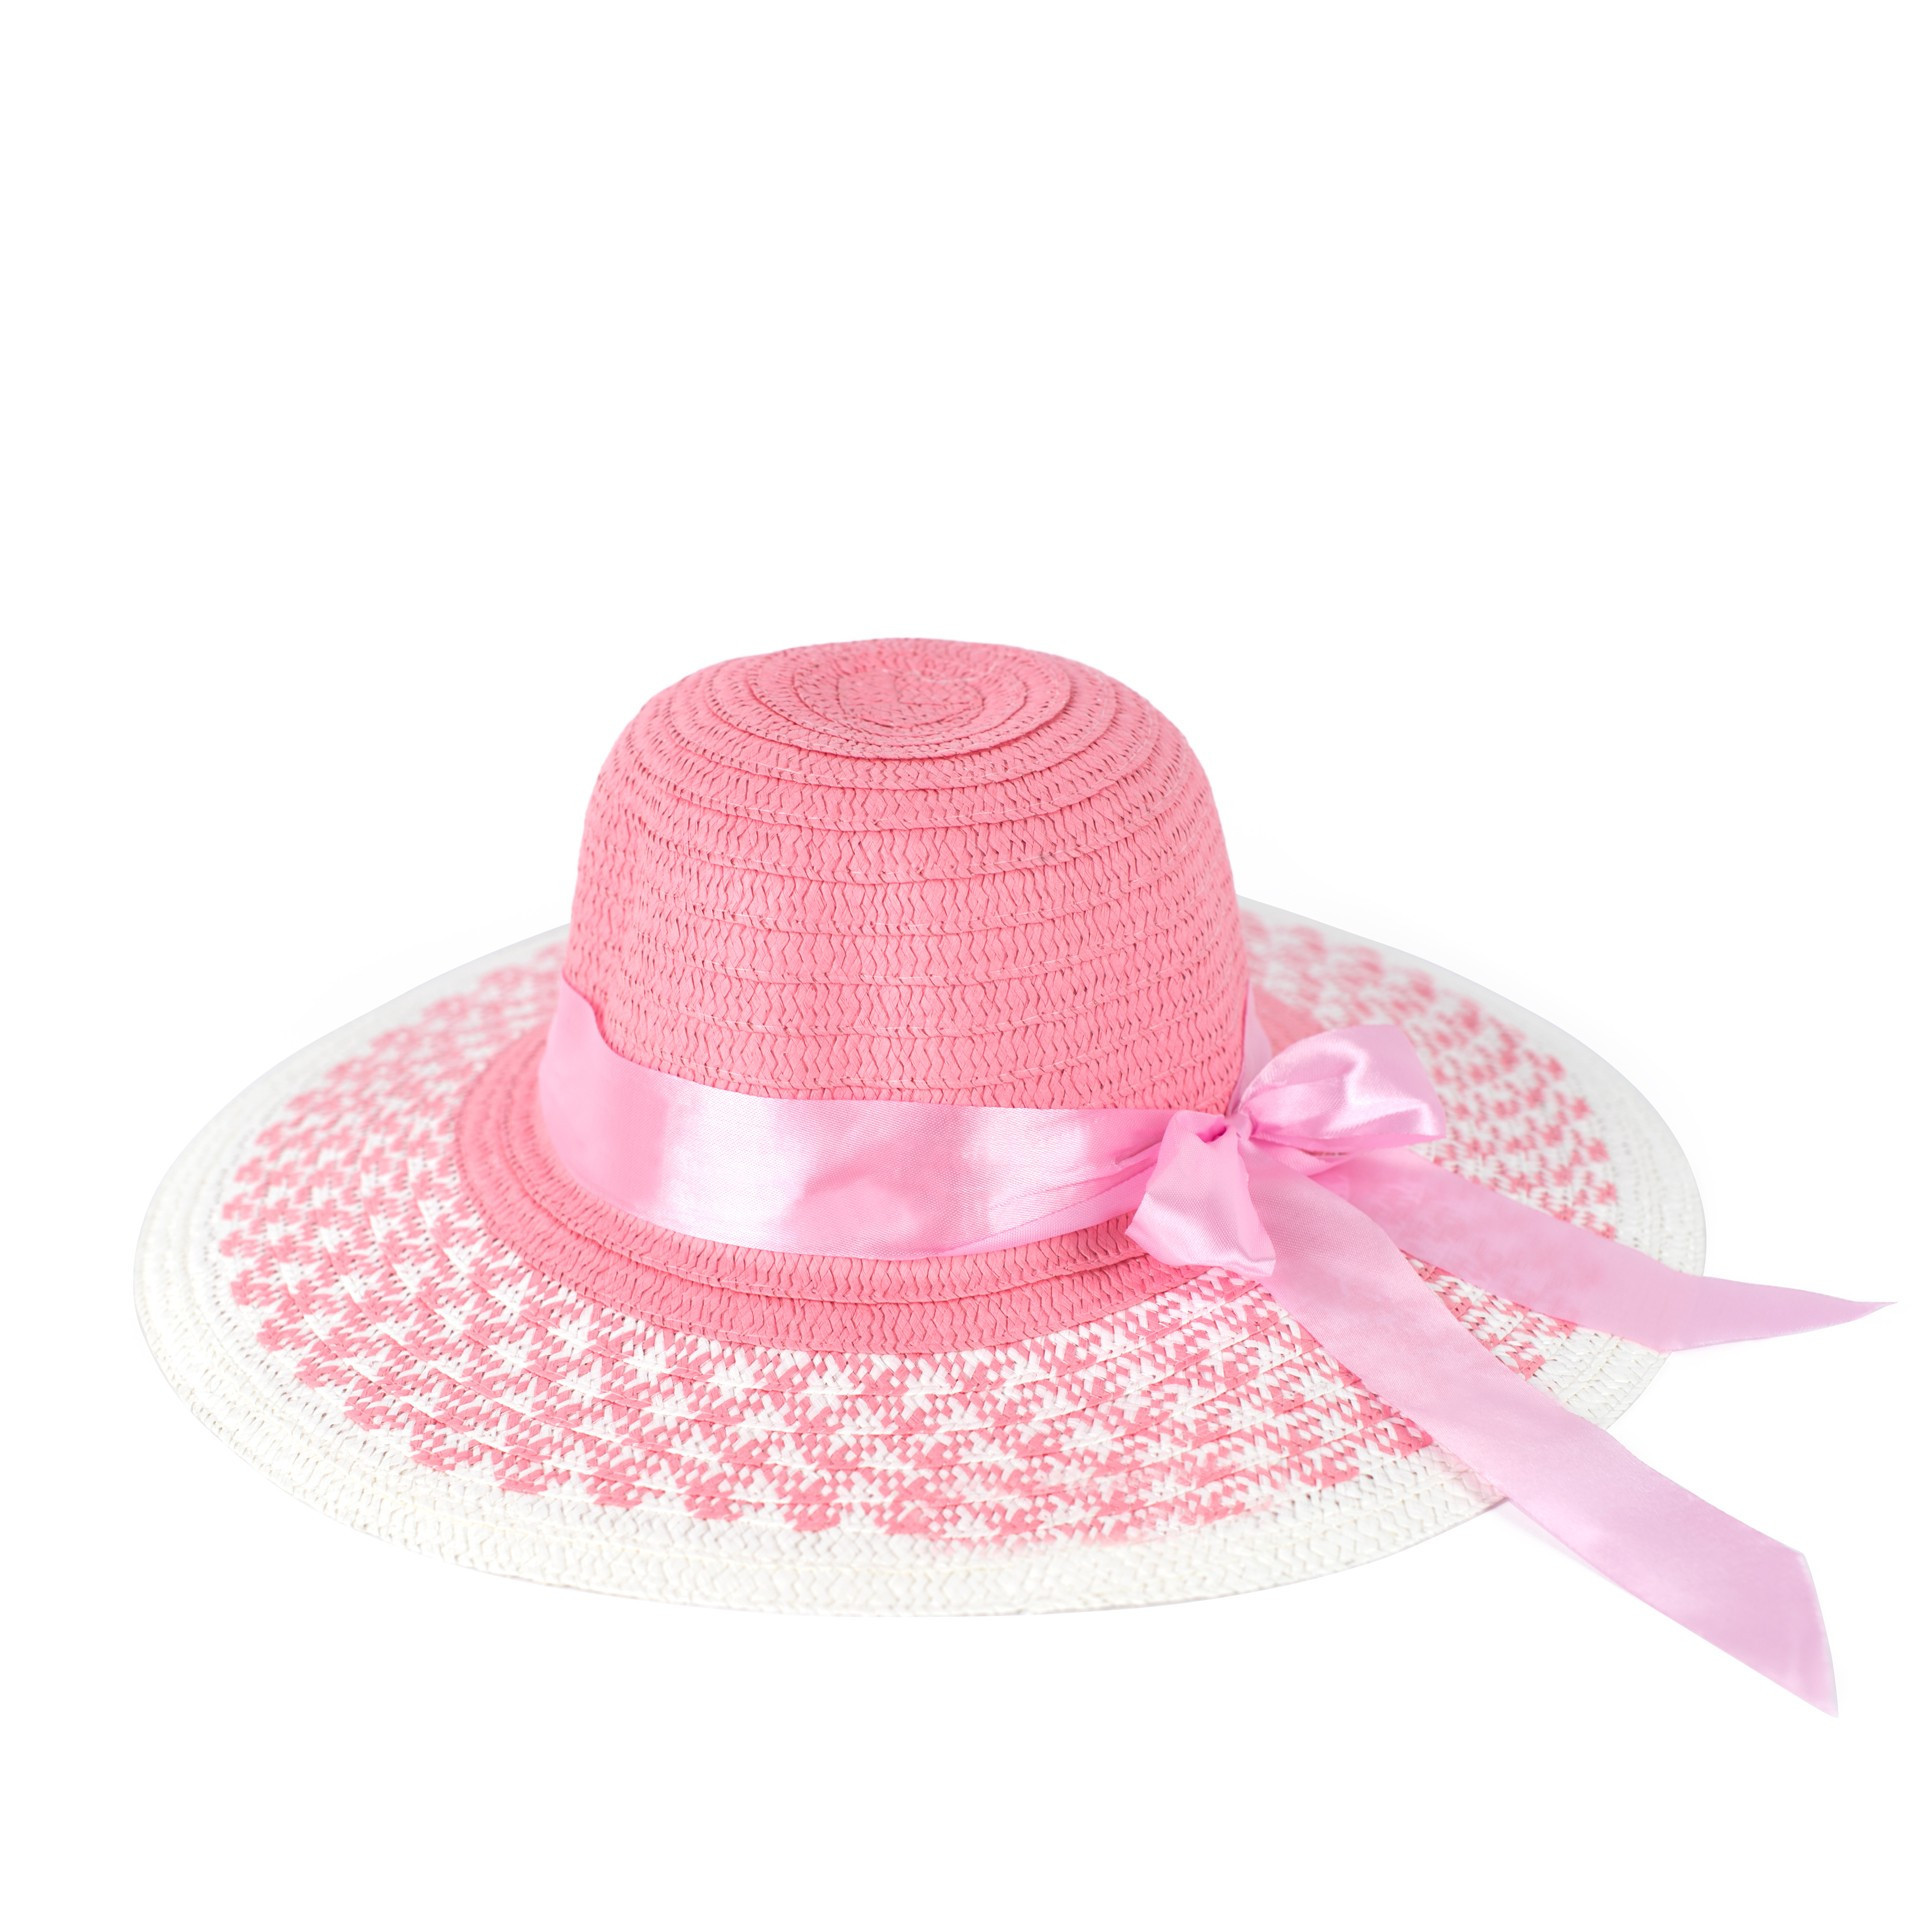 Klobouk Hat model 17554536 Pink UNI - Art of polo